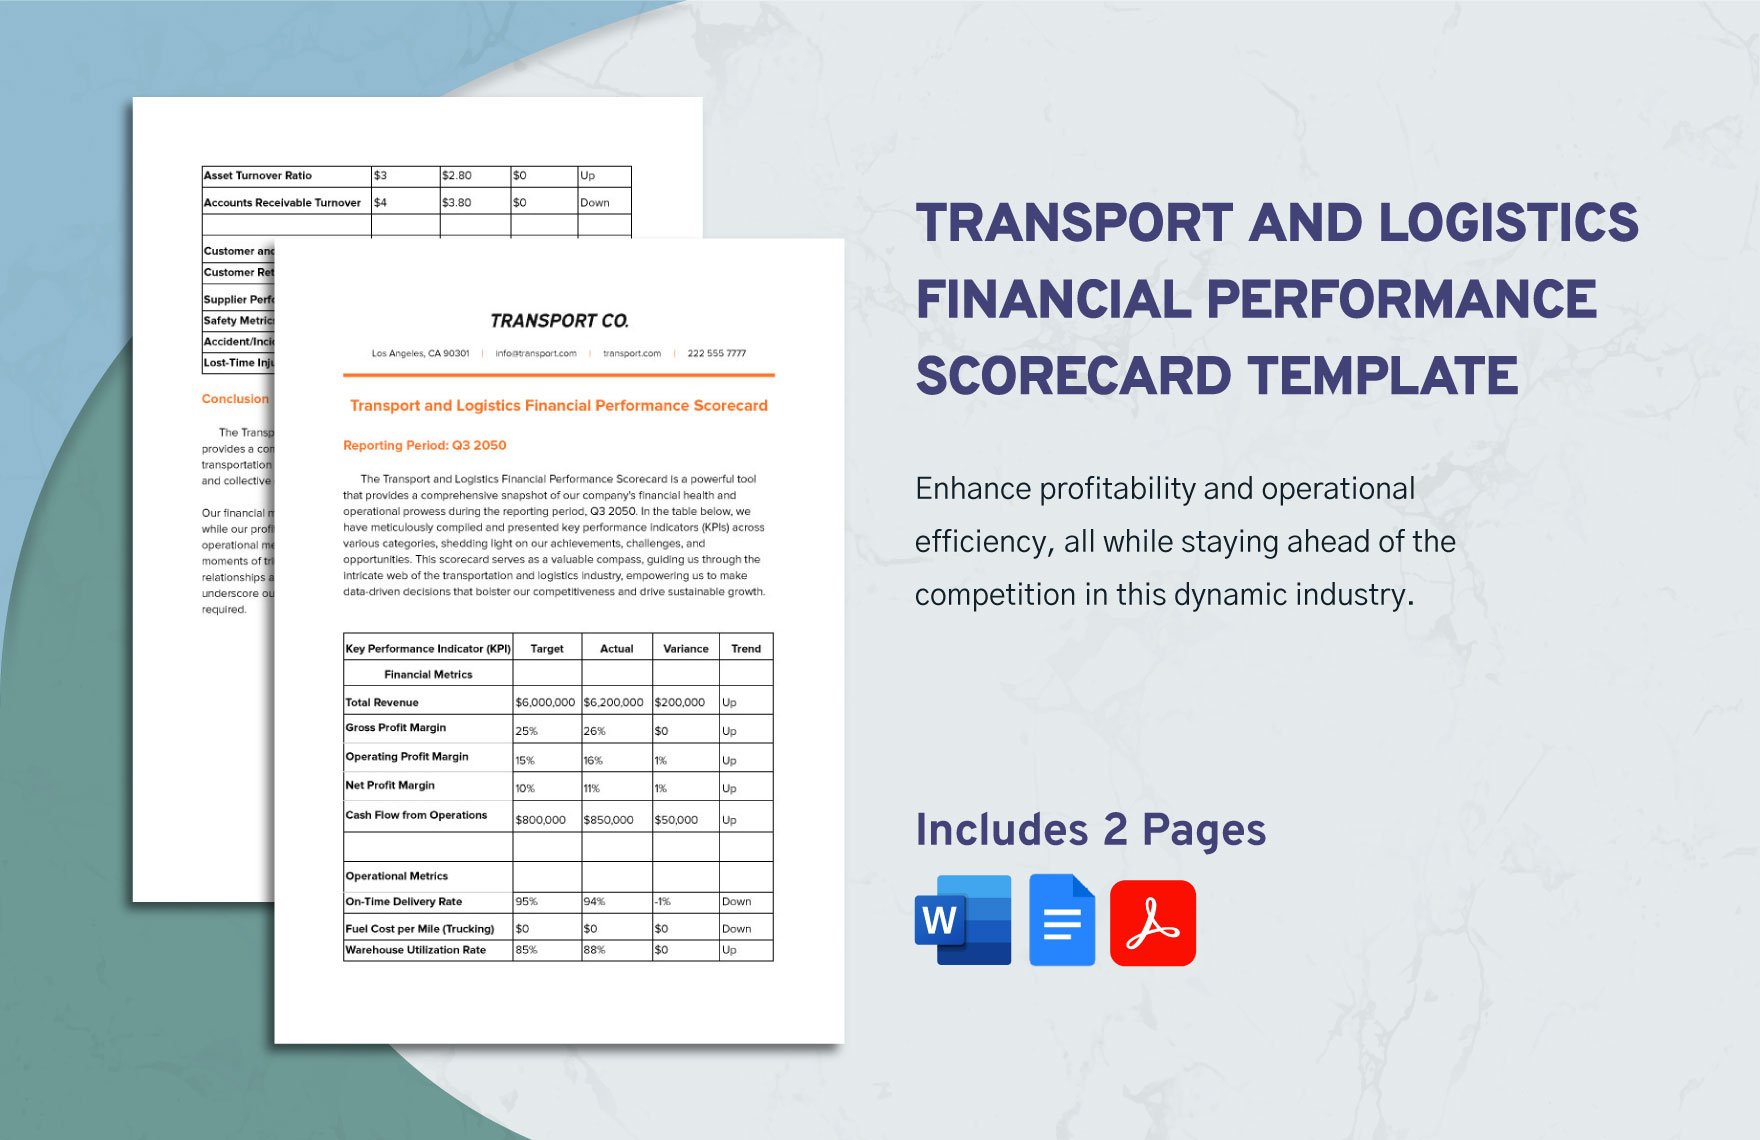 Transport and Logistics Financial Performance Scorecard Template